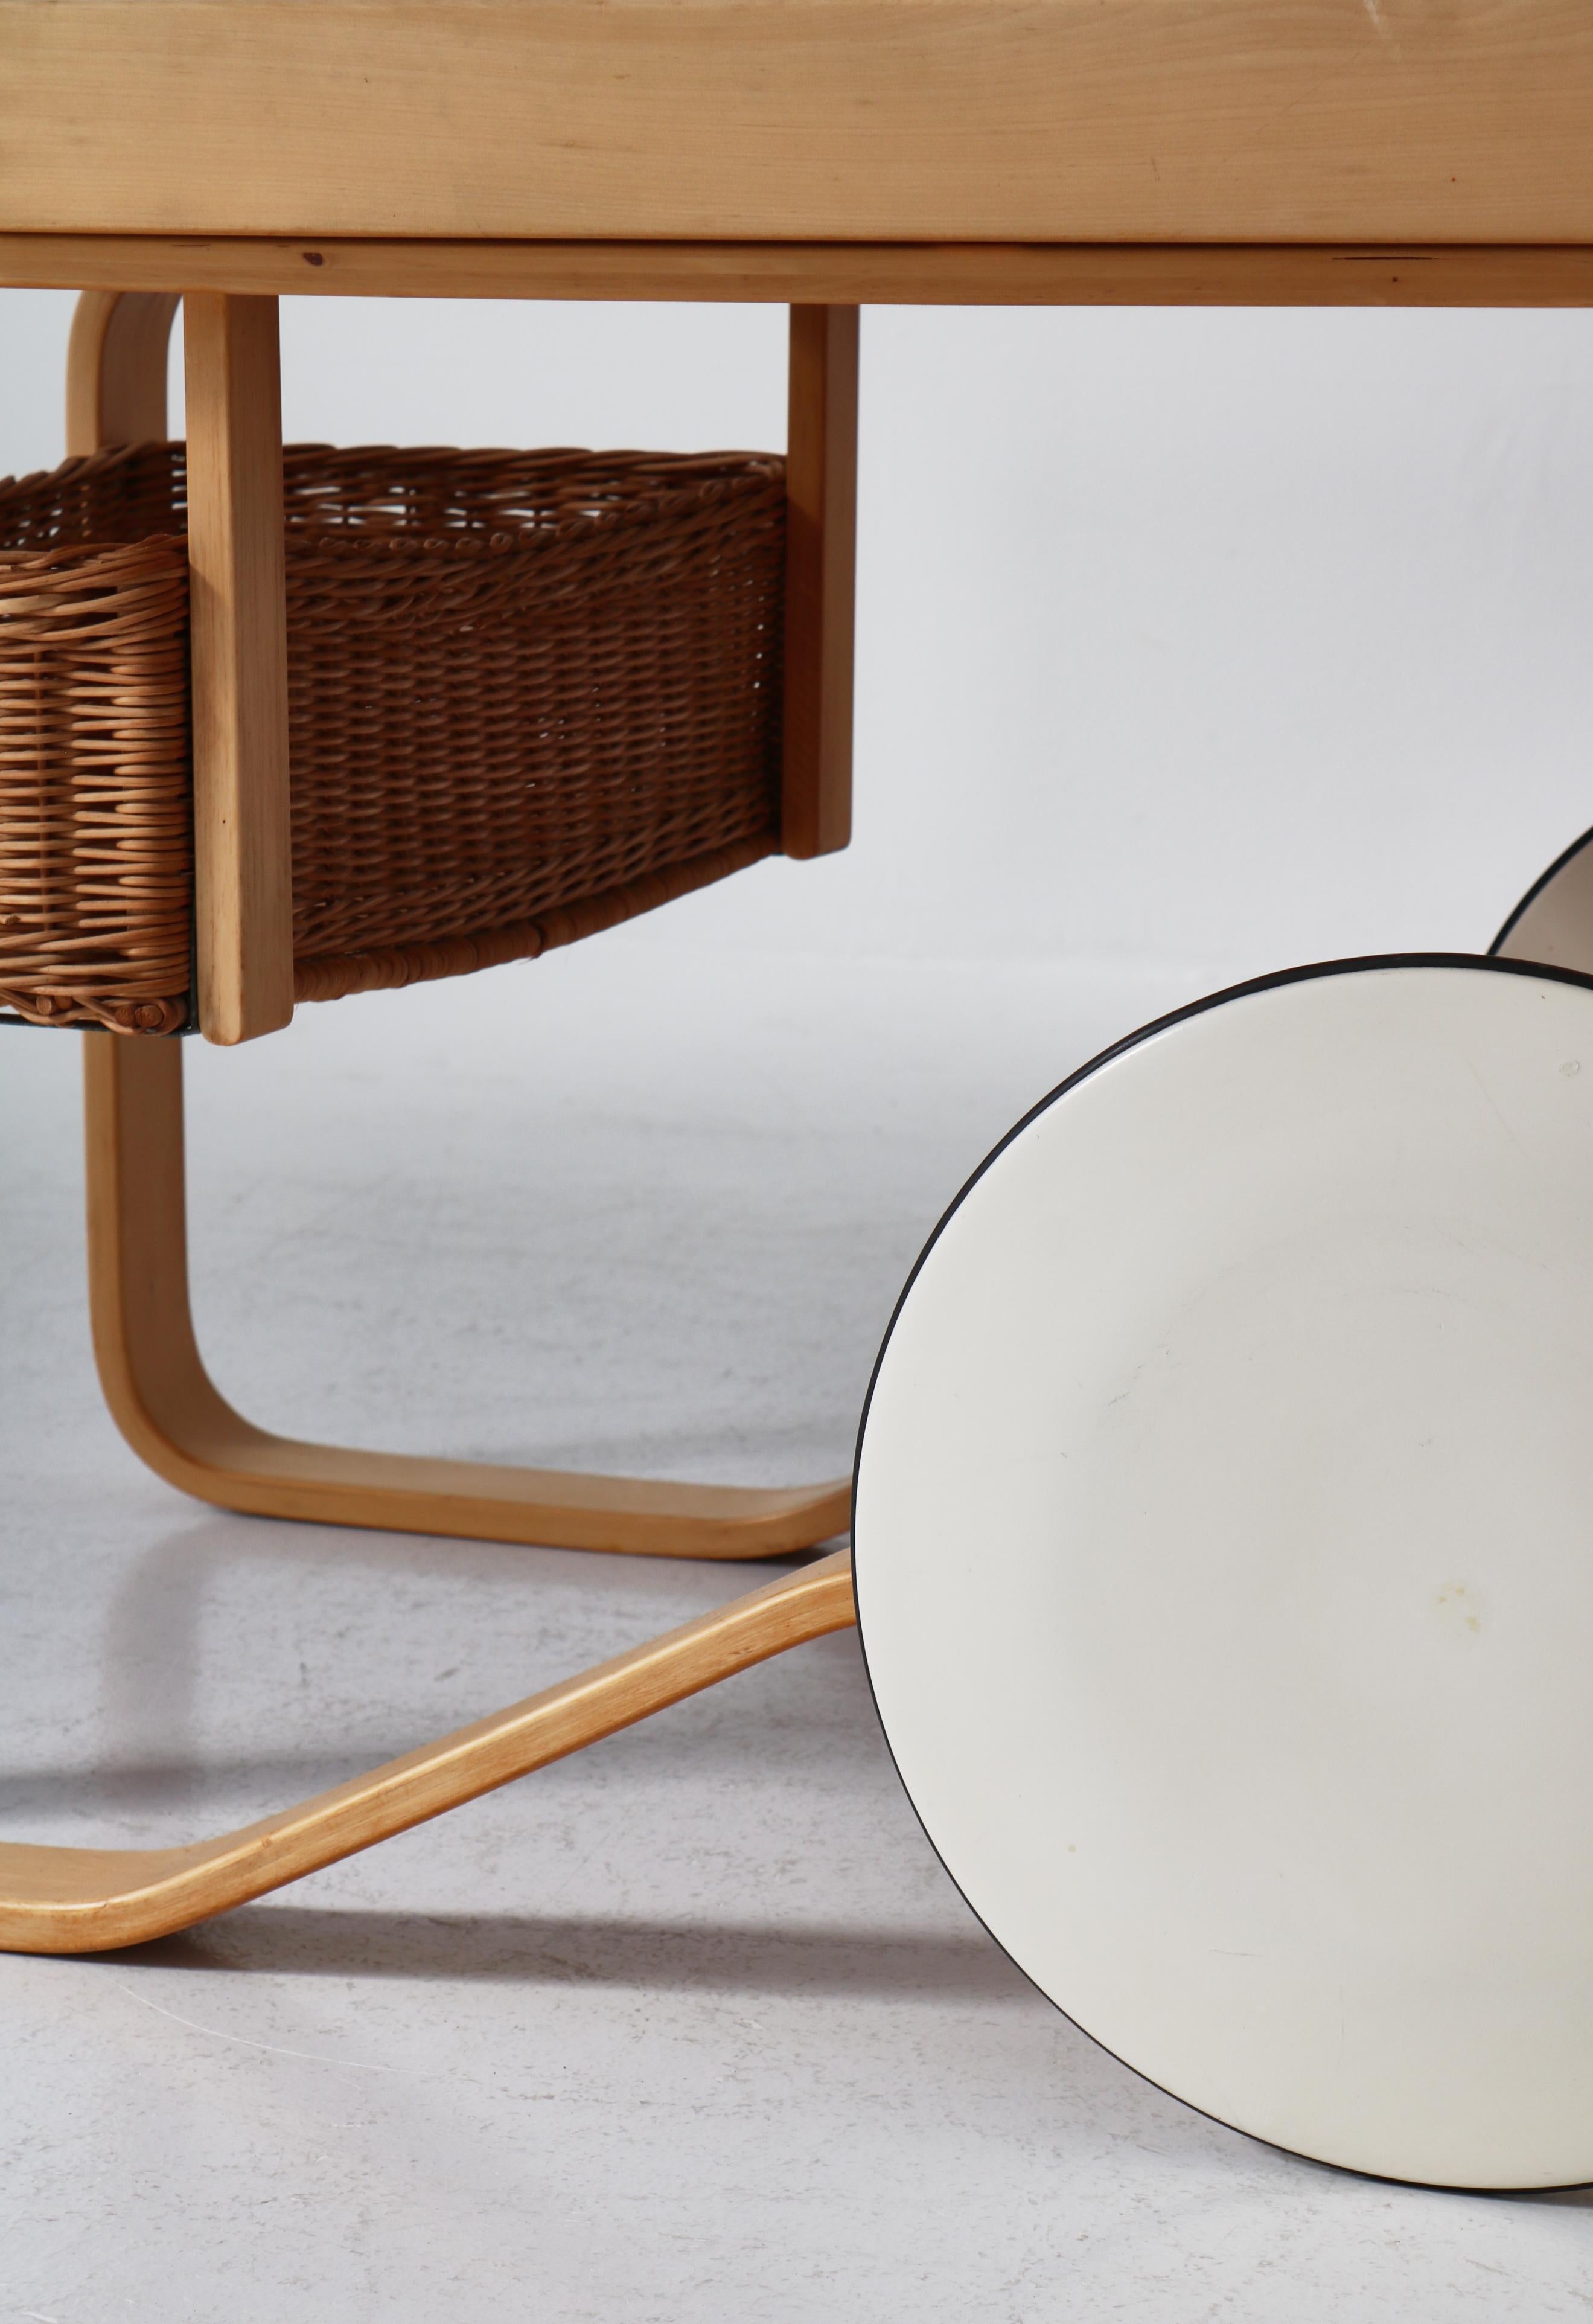 Alvar Aalto Vintage Tea Trolley 900 White Ceramic Tiles & Rattan Basket, 1960s For Sale 2